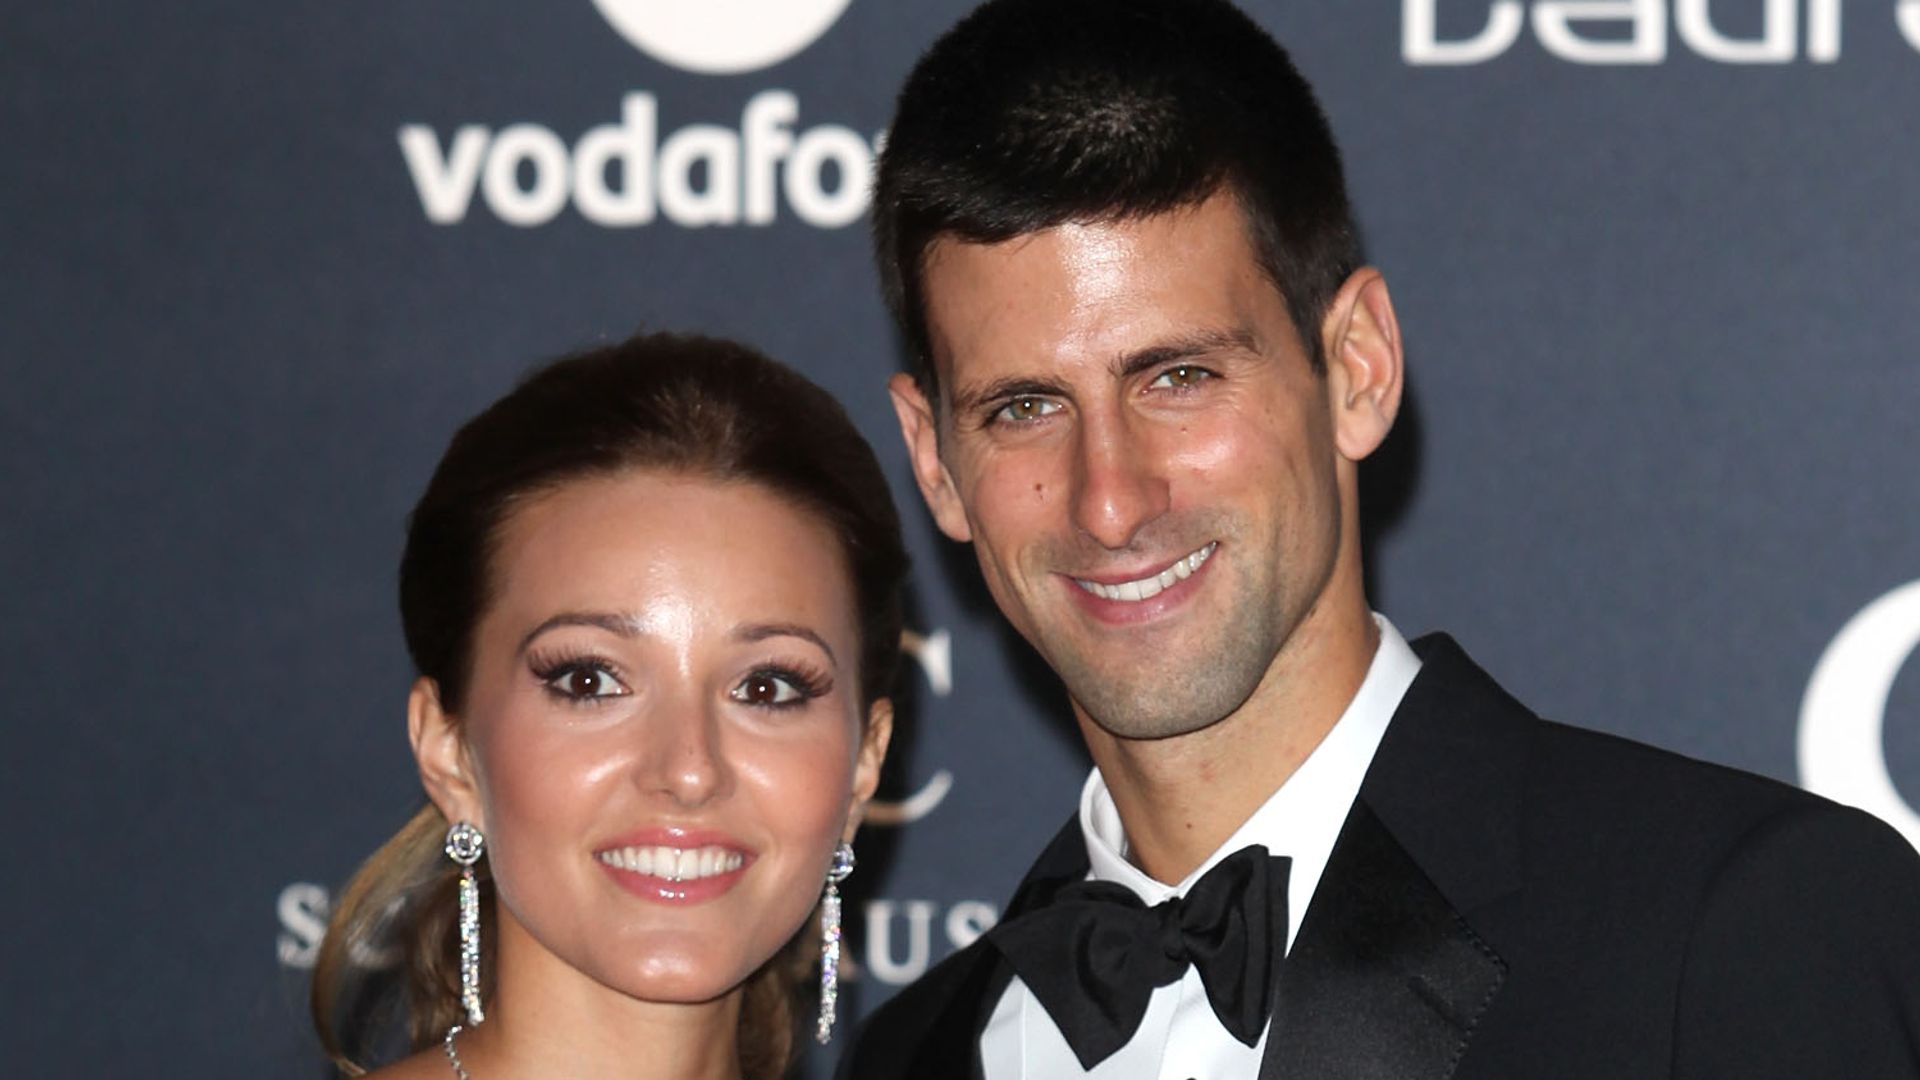 Jelena and Novak Djokovic posing on the red carpet